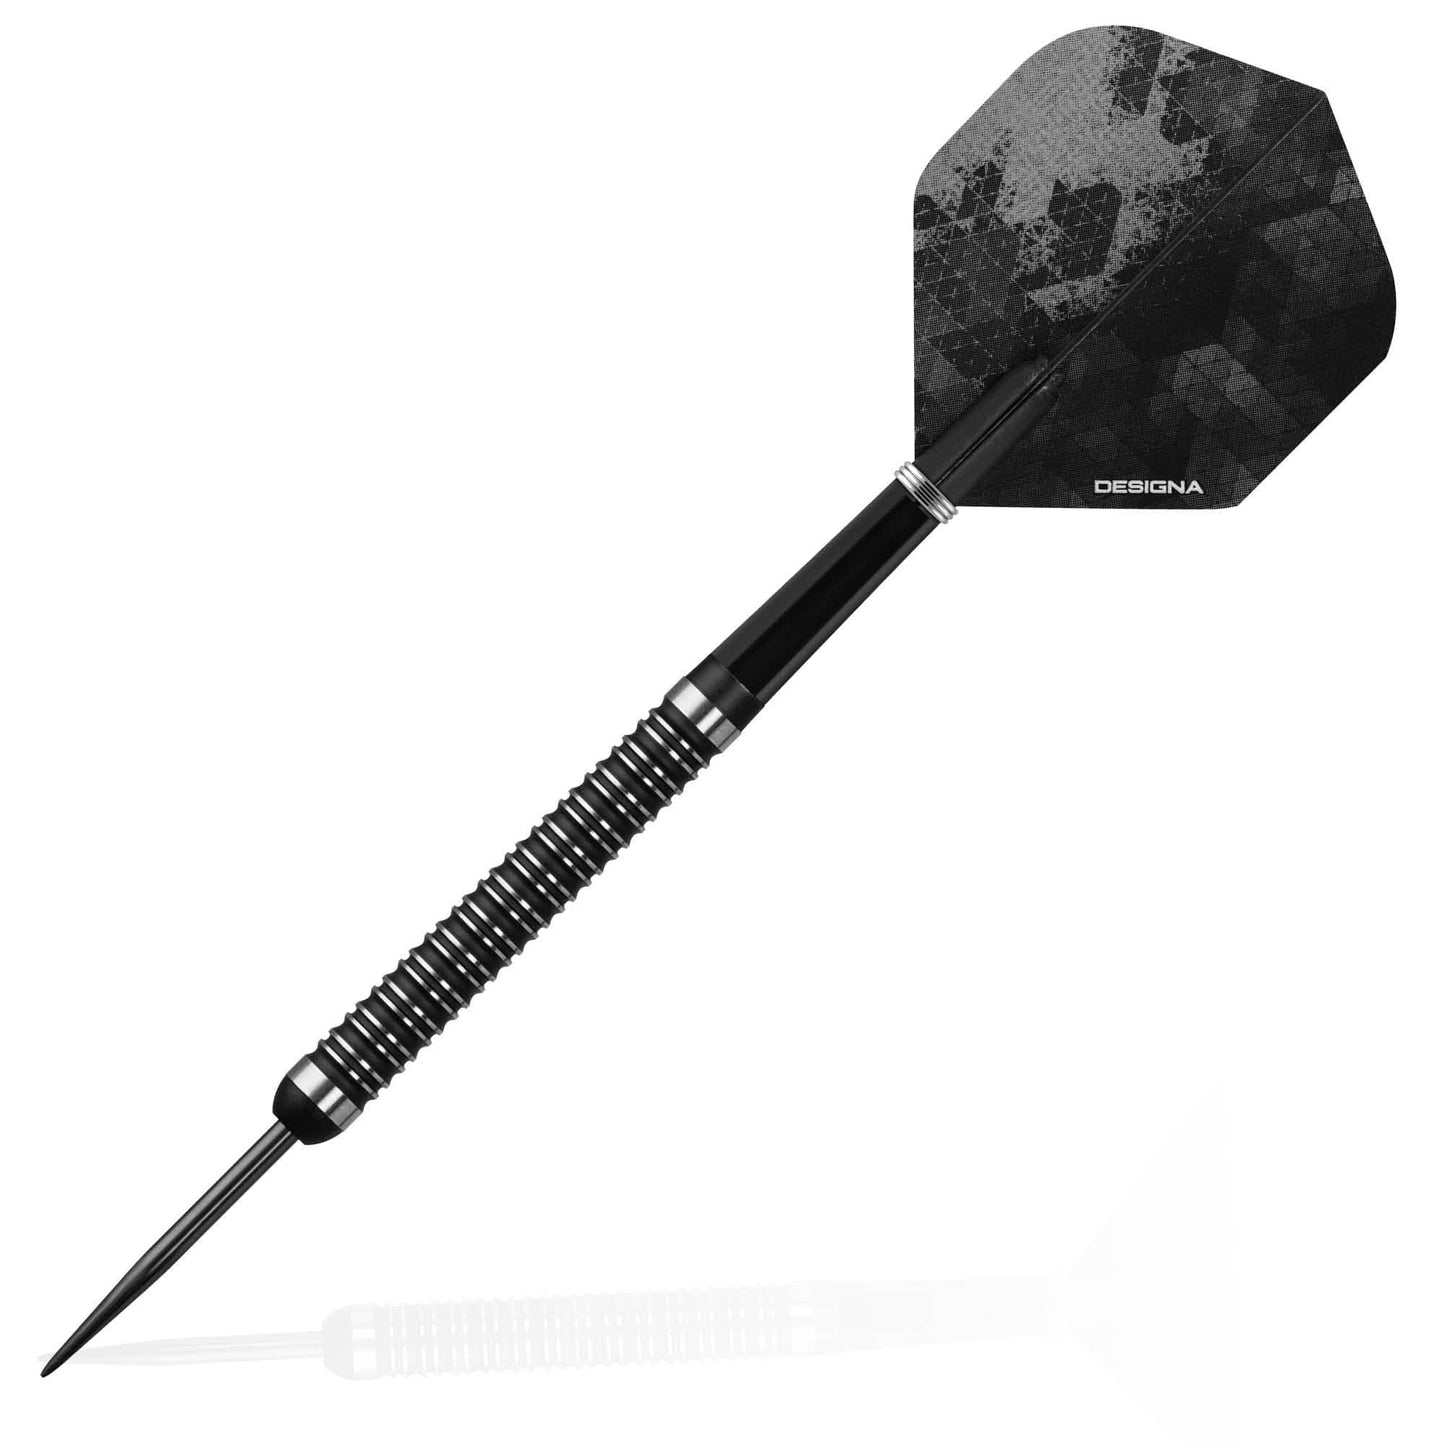 Designa Dark Thunder V2 Darts - Steel Tip - Black